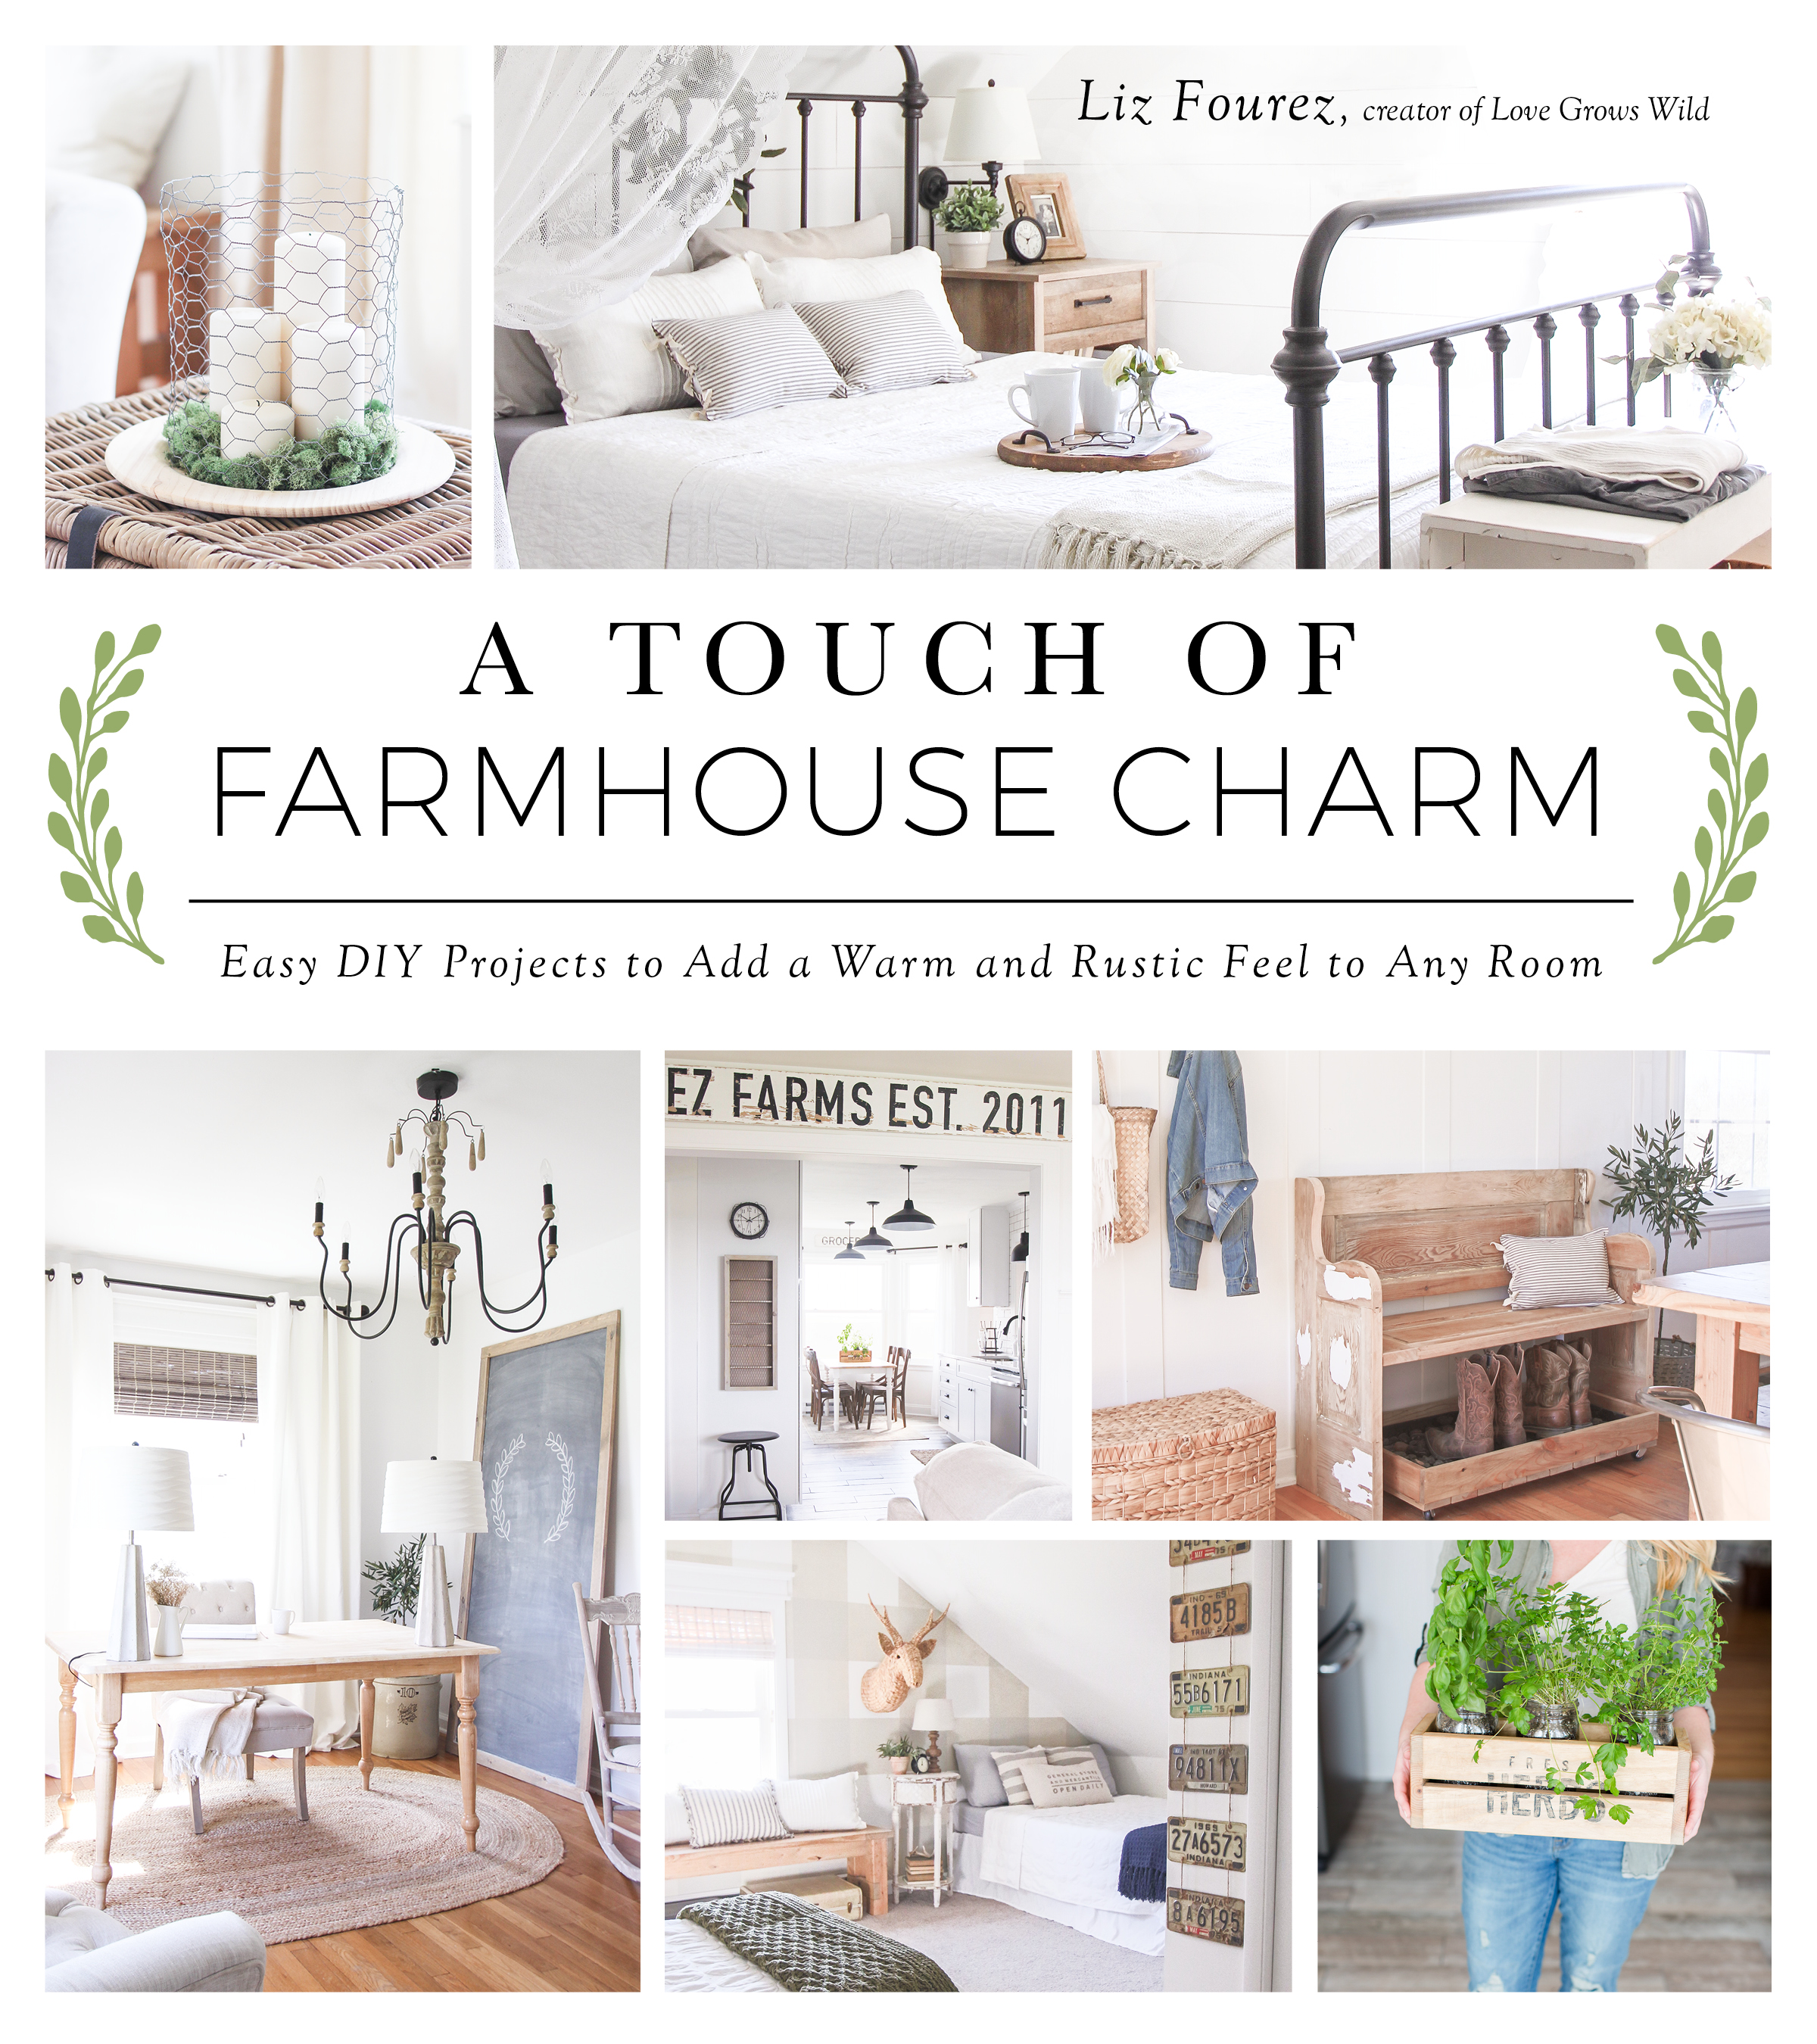 A Touch of Farmhouse Charm cover | LoveGrowsWild.com